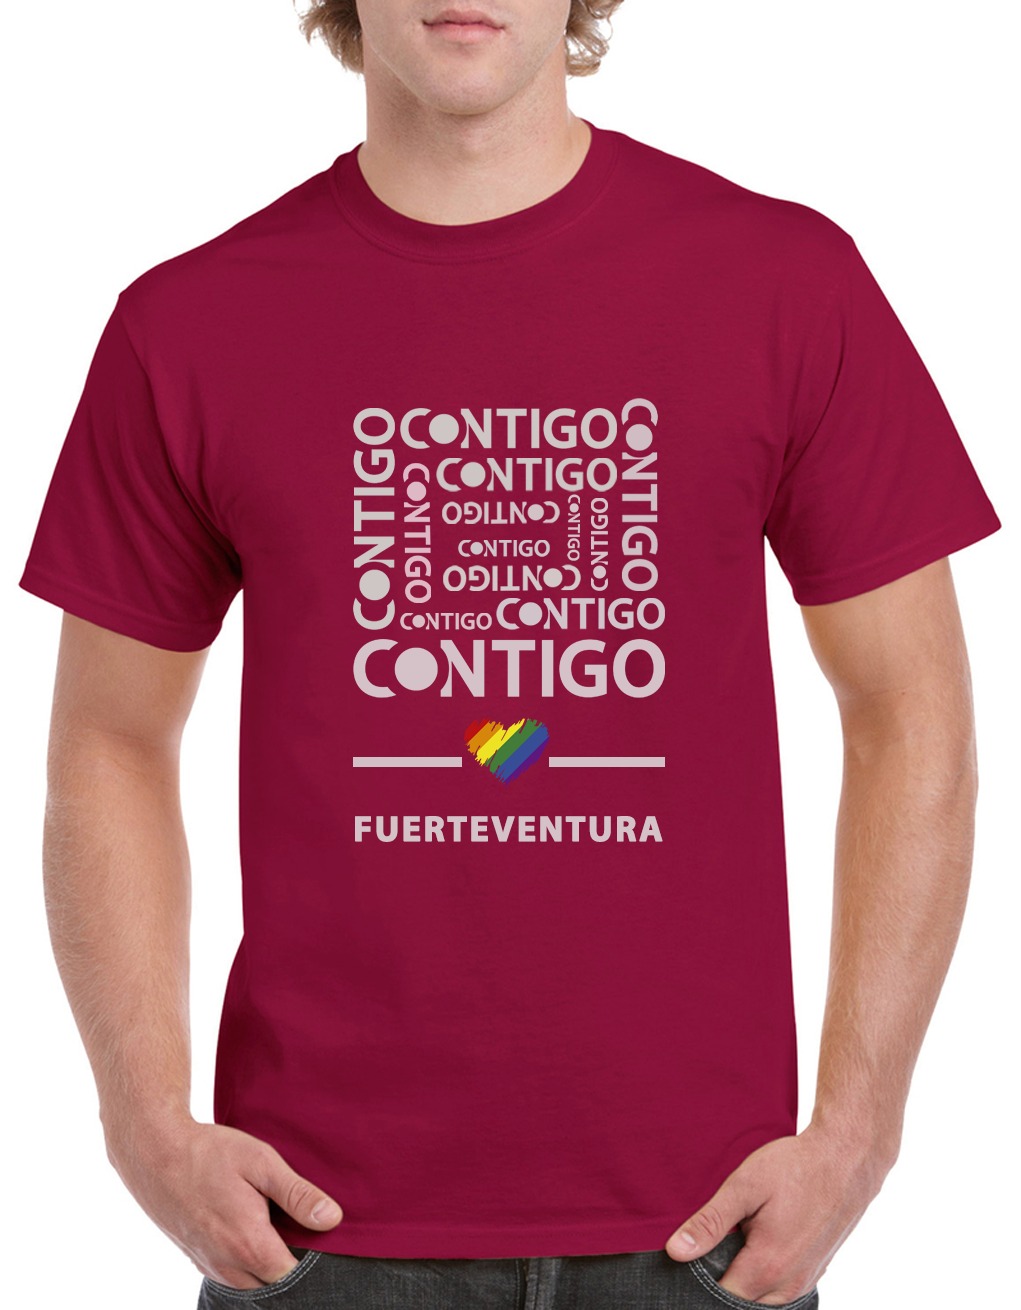 Camiseta Burdeos Lgtbi Contigo Somos Democracia Fuerteventura